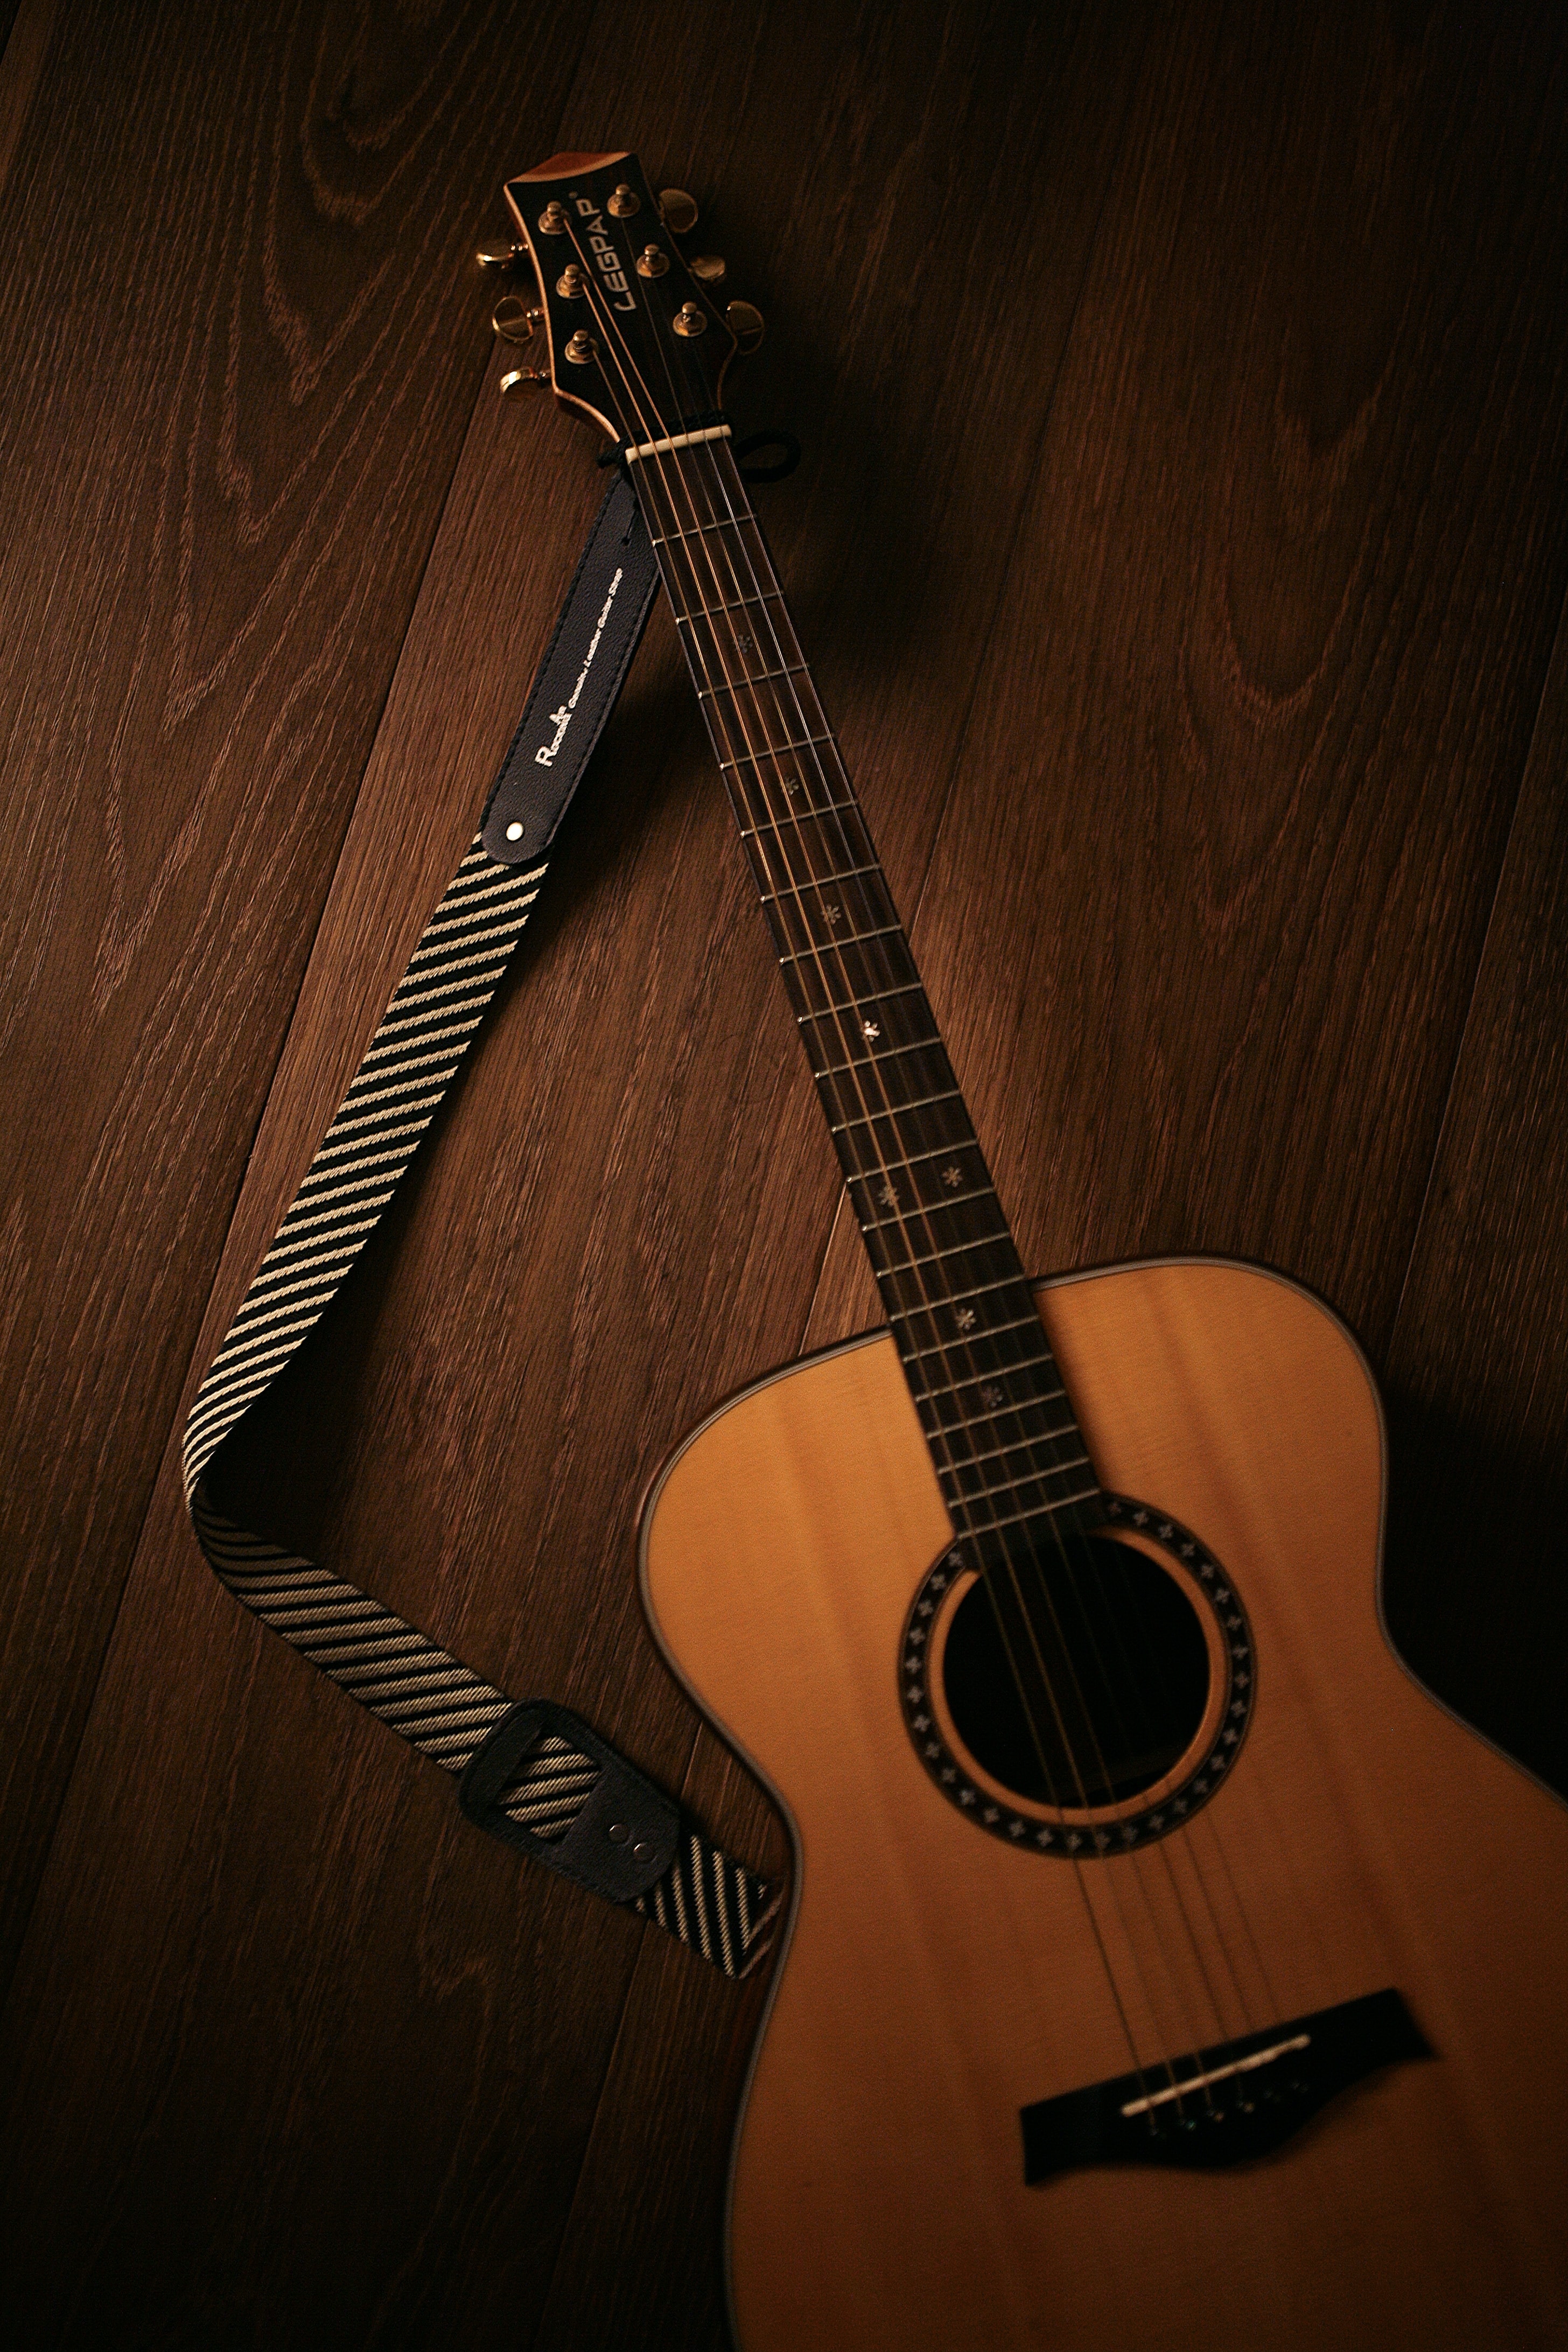 guitar, music, acoustic guitar, brown, musical instrument, wood, wooden